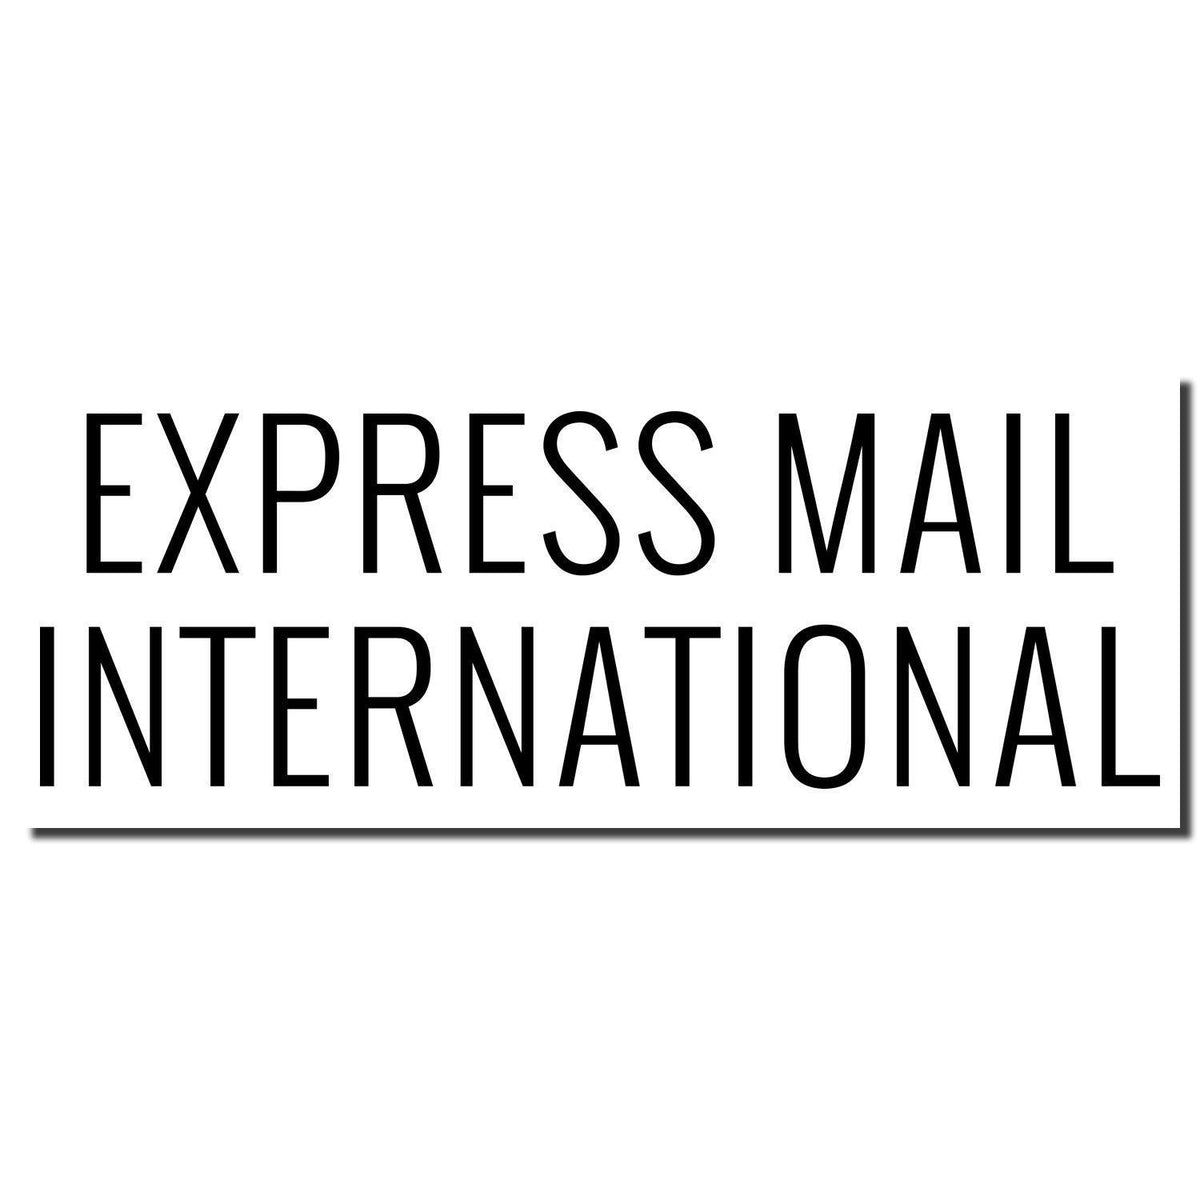 Enlarged Imprint Express Mail International Rubber Stamp Sample